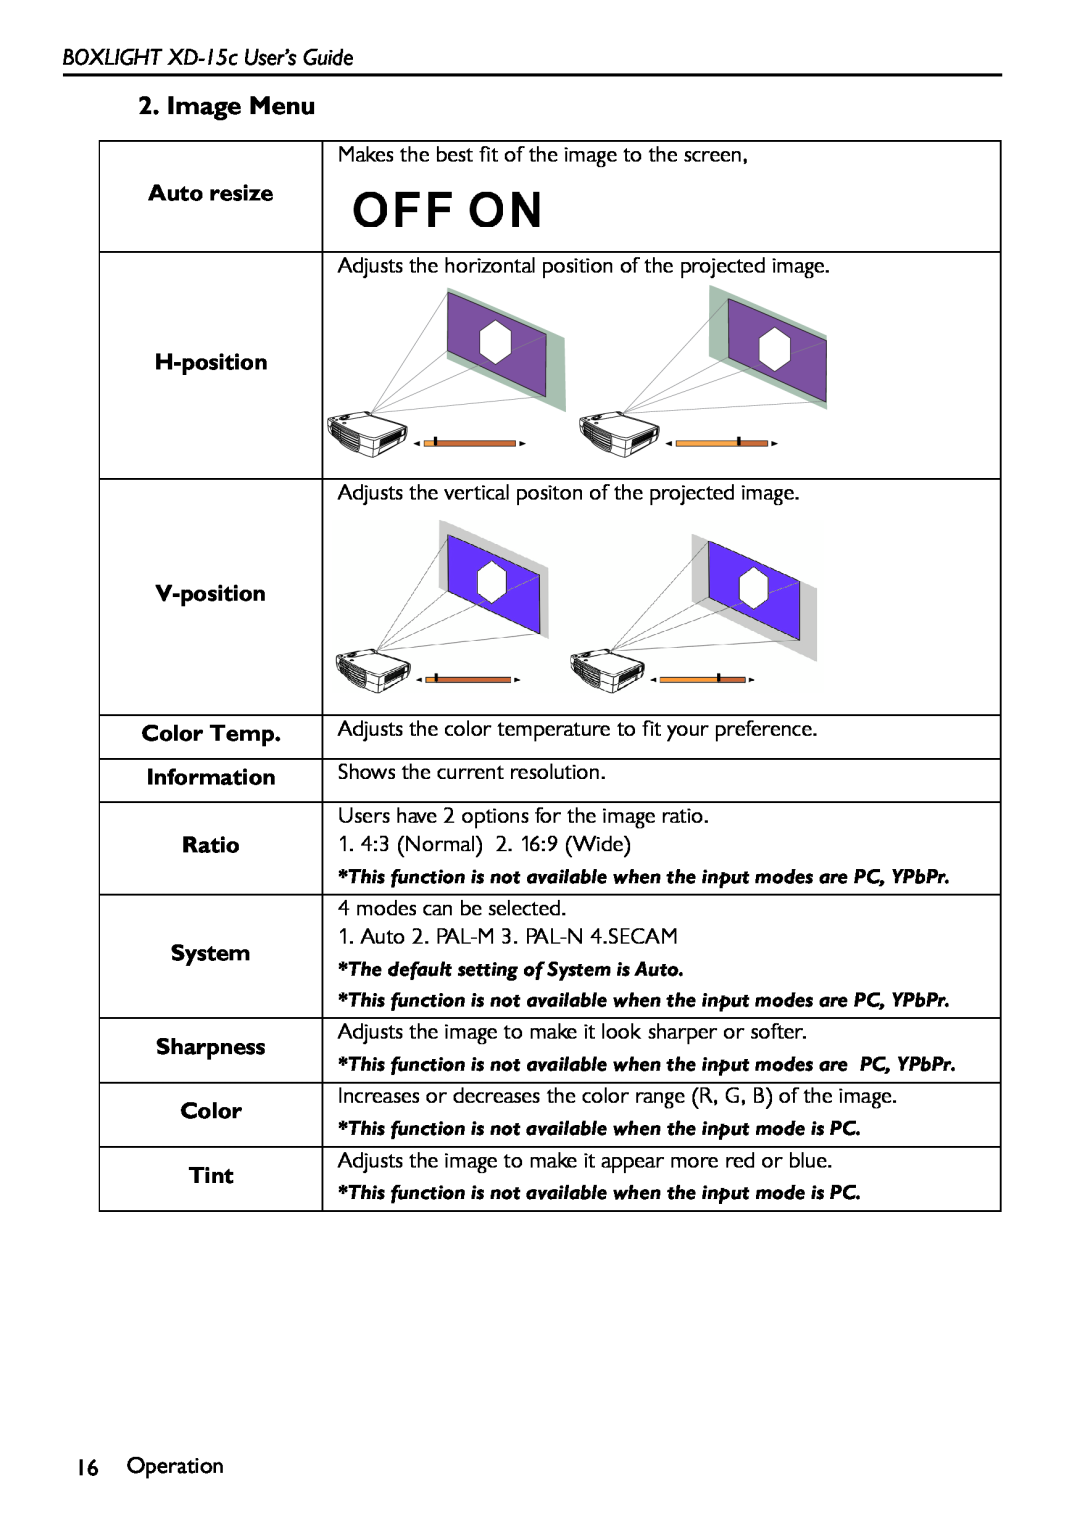 BOXLIGHT manual Image Menu, BOXLIGHT XD-15c User’s Guide, System, Sharpness 